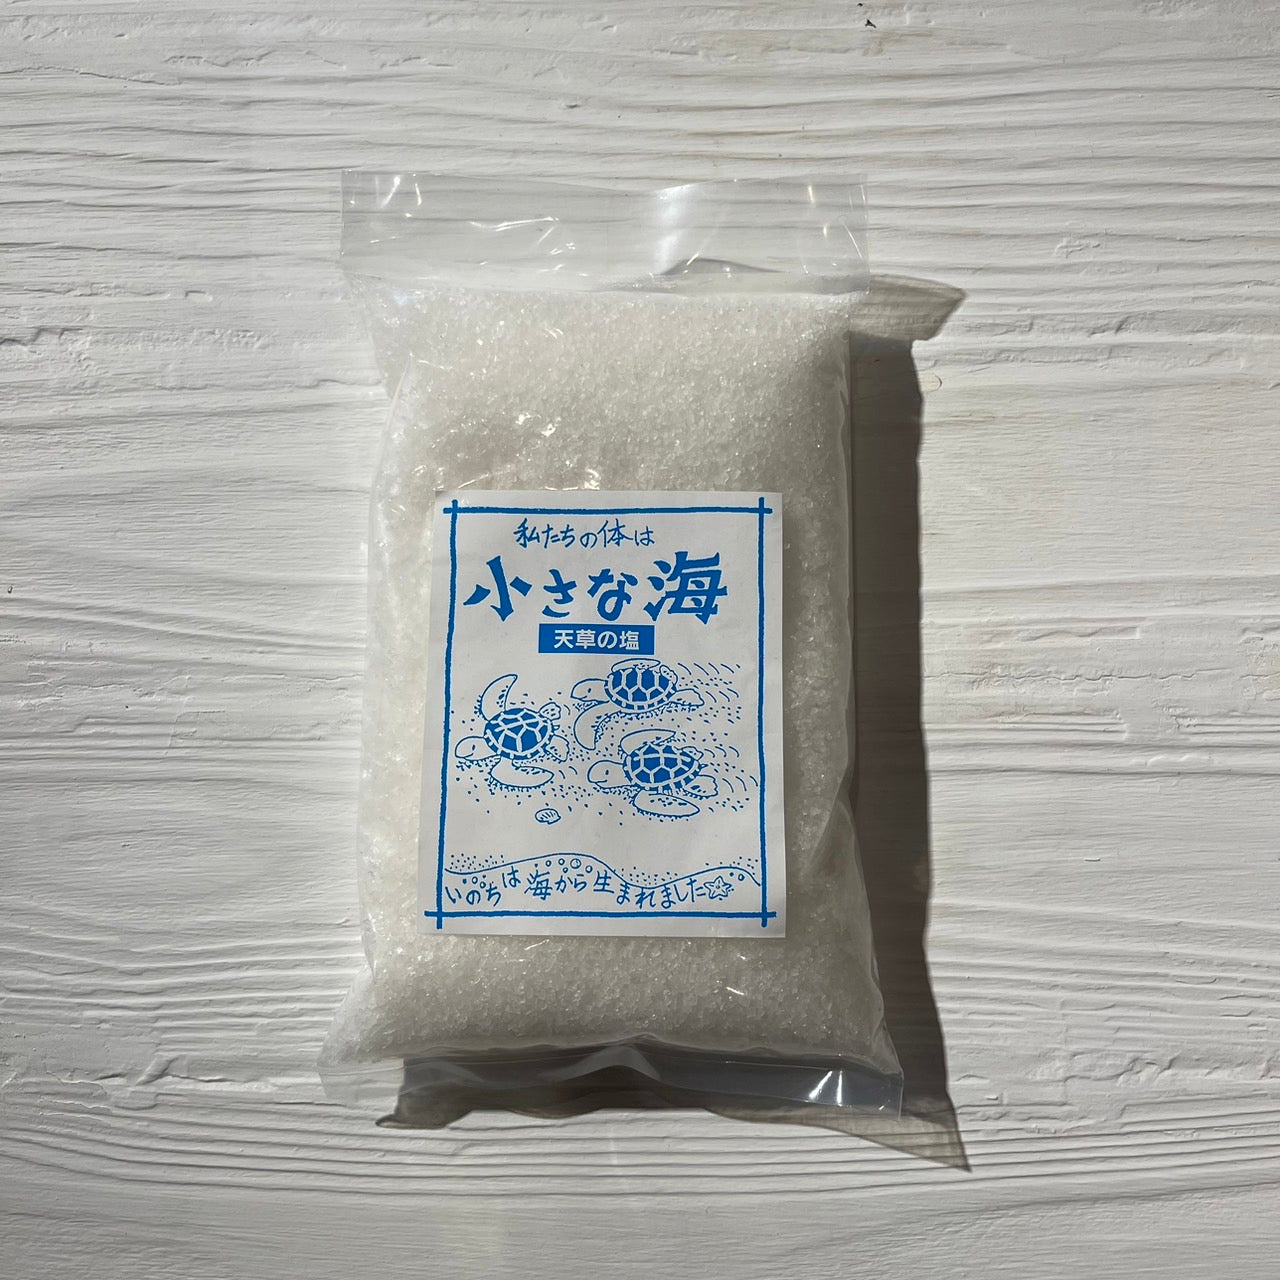 Small Sea Amakusa Salt 500g